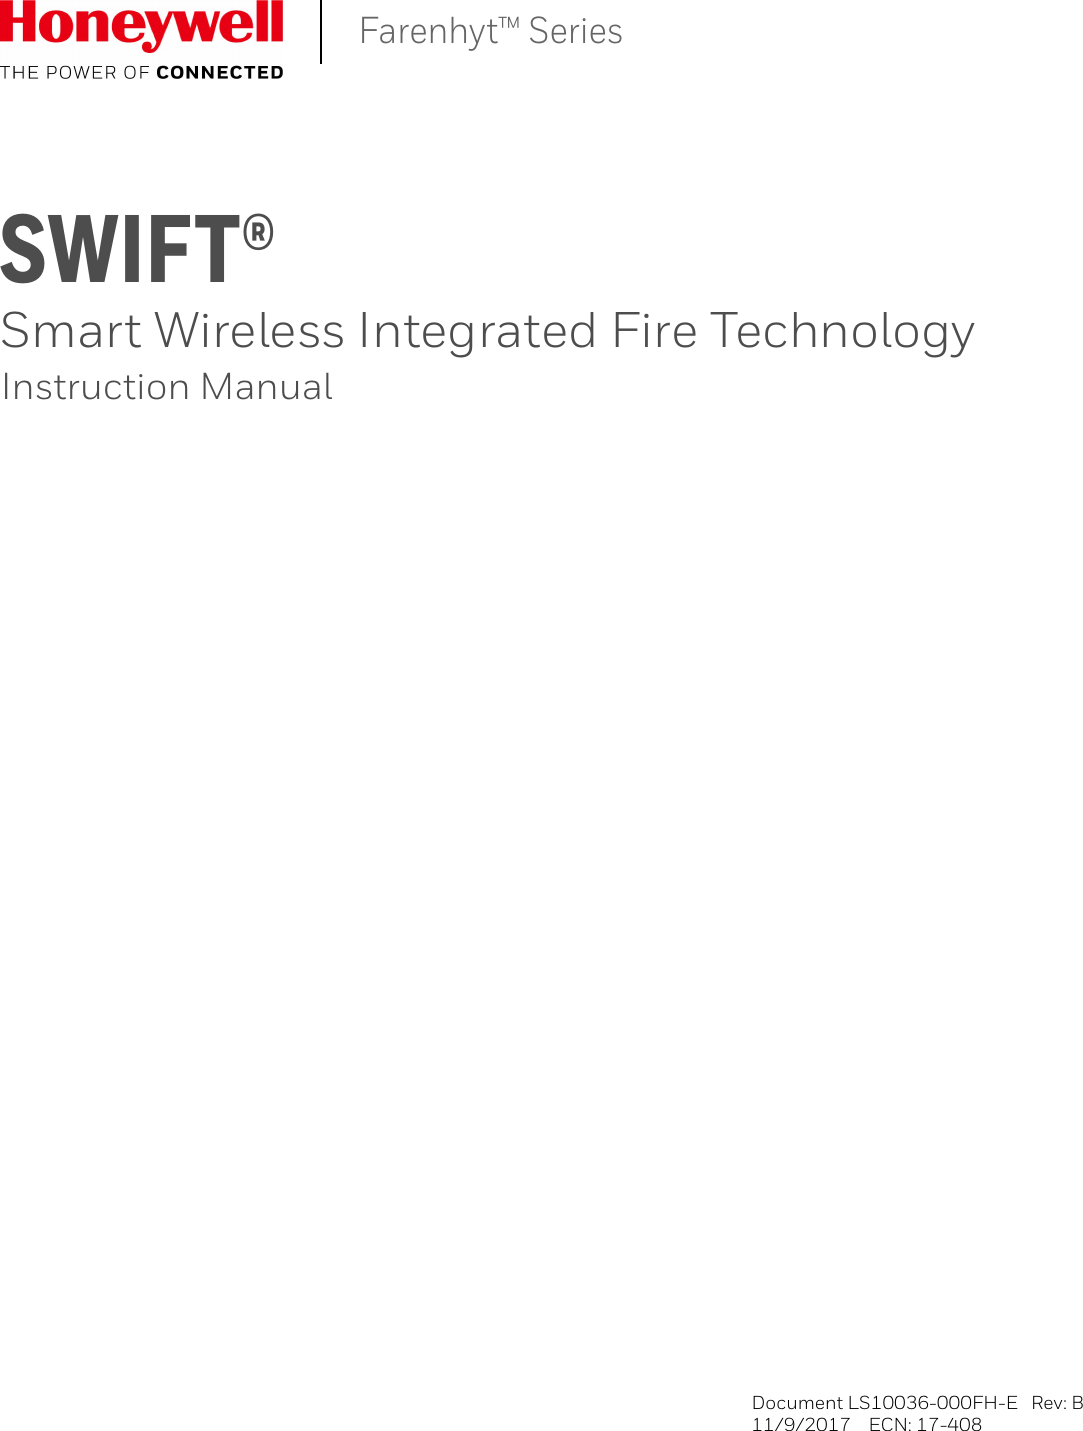 SWIFT®Smart Wireless Integrated Fire TechnologyInstruction ManualDocument LS10036-000FH-E   Rev: B11/9/2017    ECN: 17-408Farenhyt™ Series